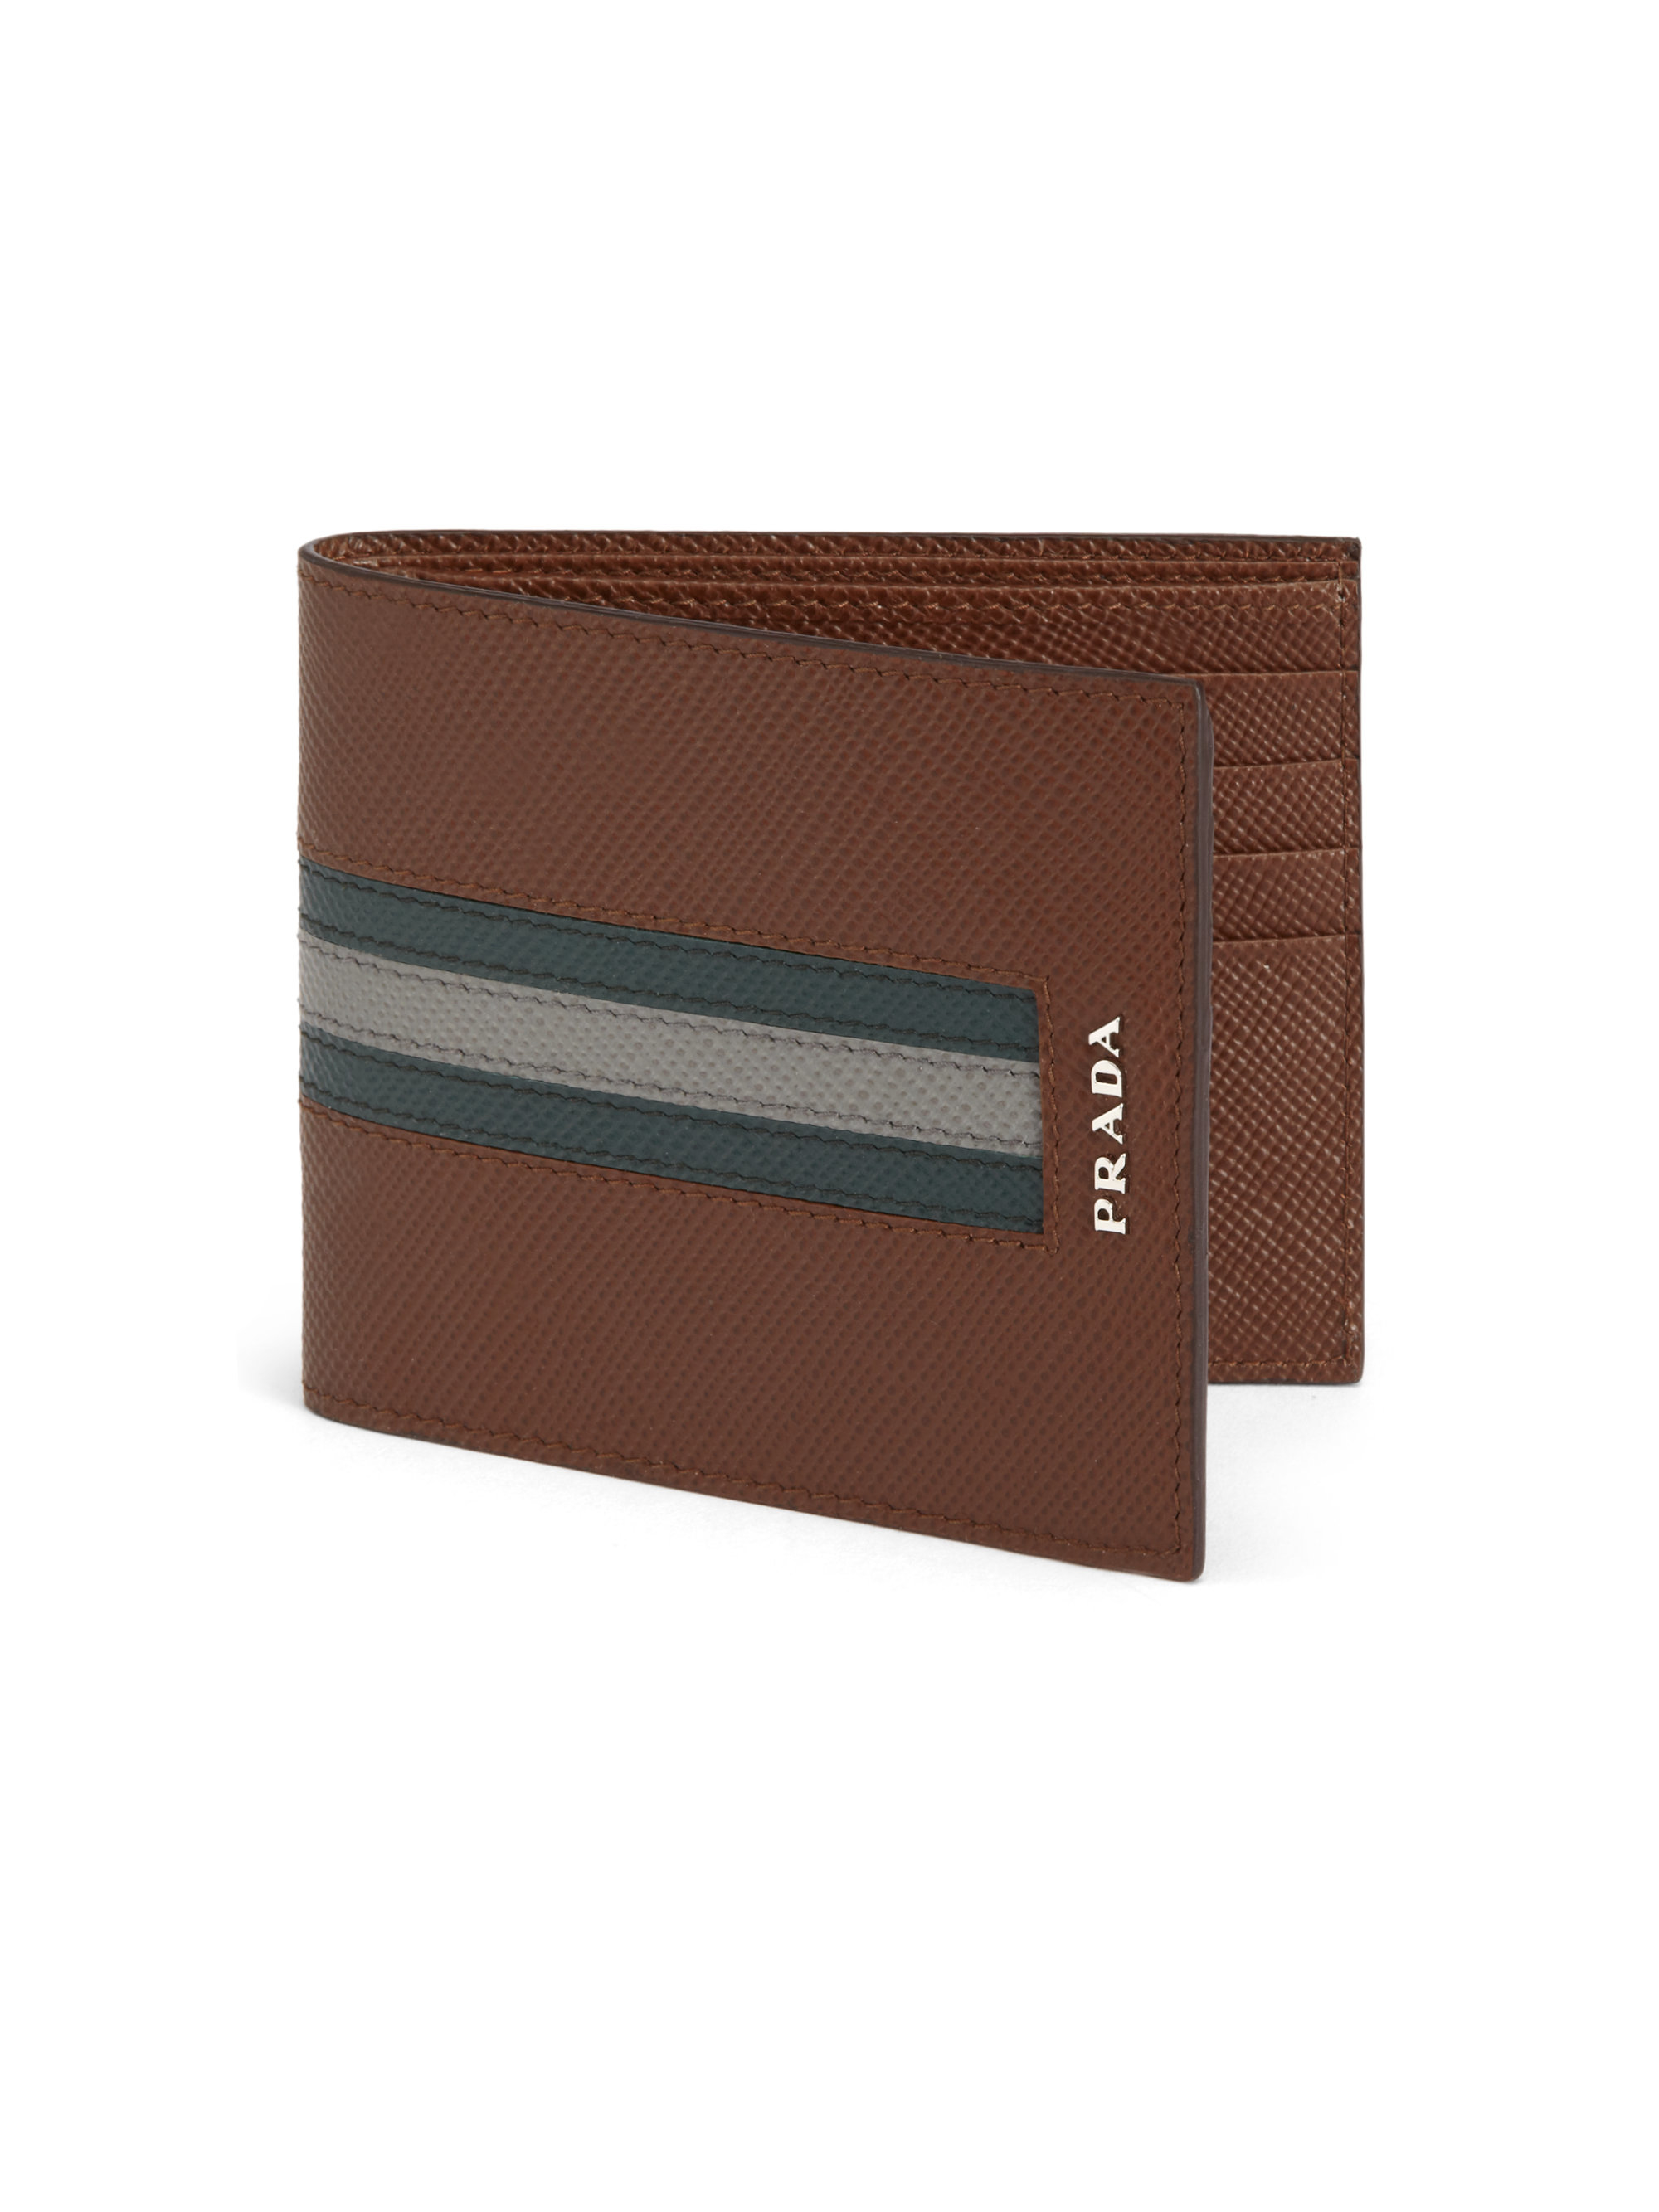 Prada Saffiano Cuir Striped Bifold Wallet in Brown for Men - Lyst